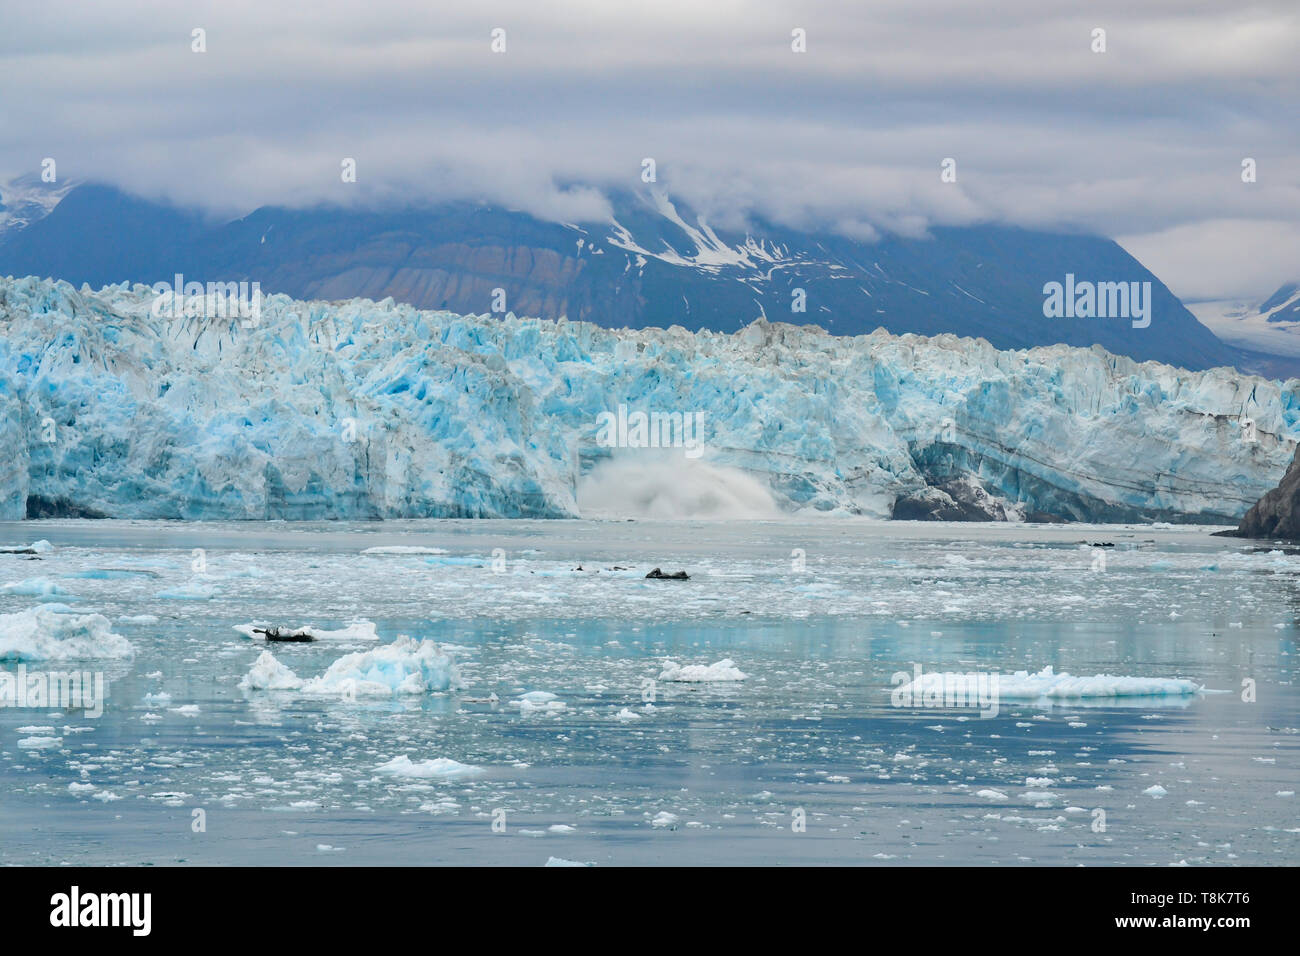 Glacier in Alaska seen from cruise ship Stock Photo